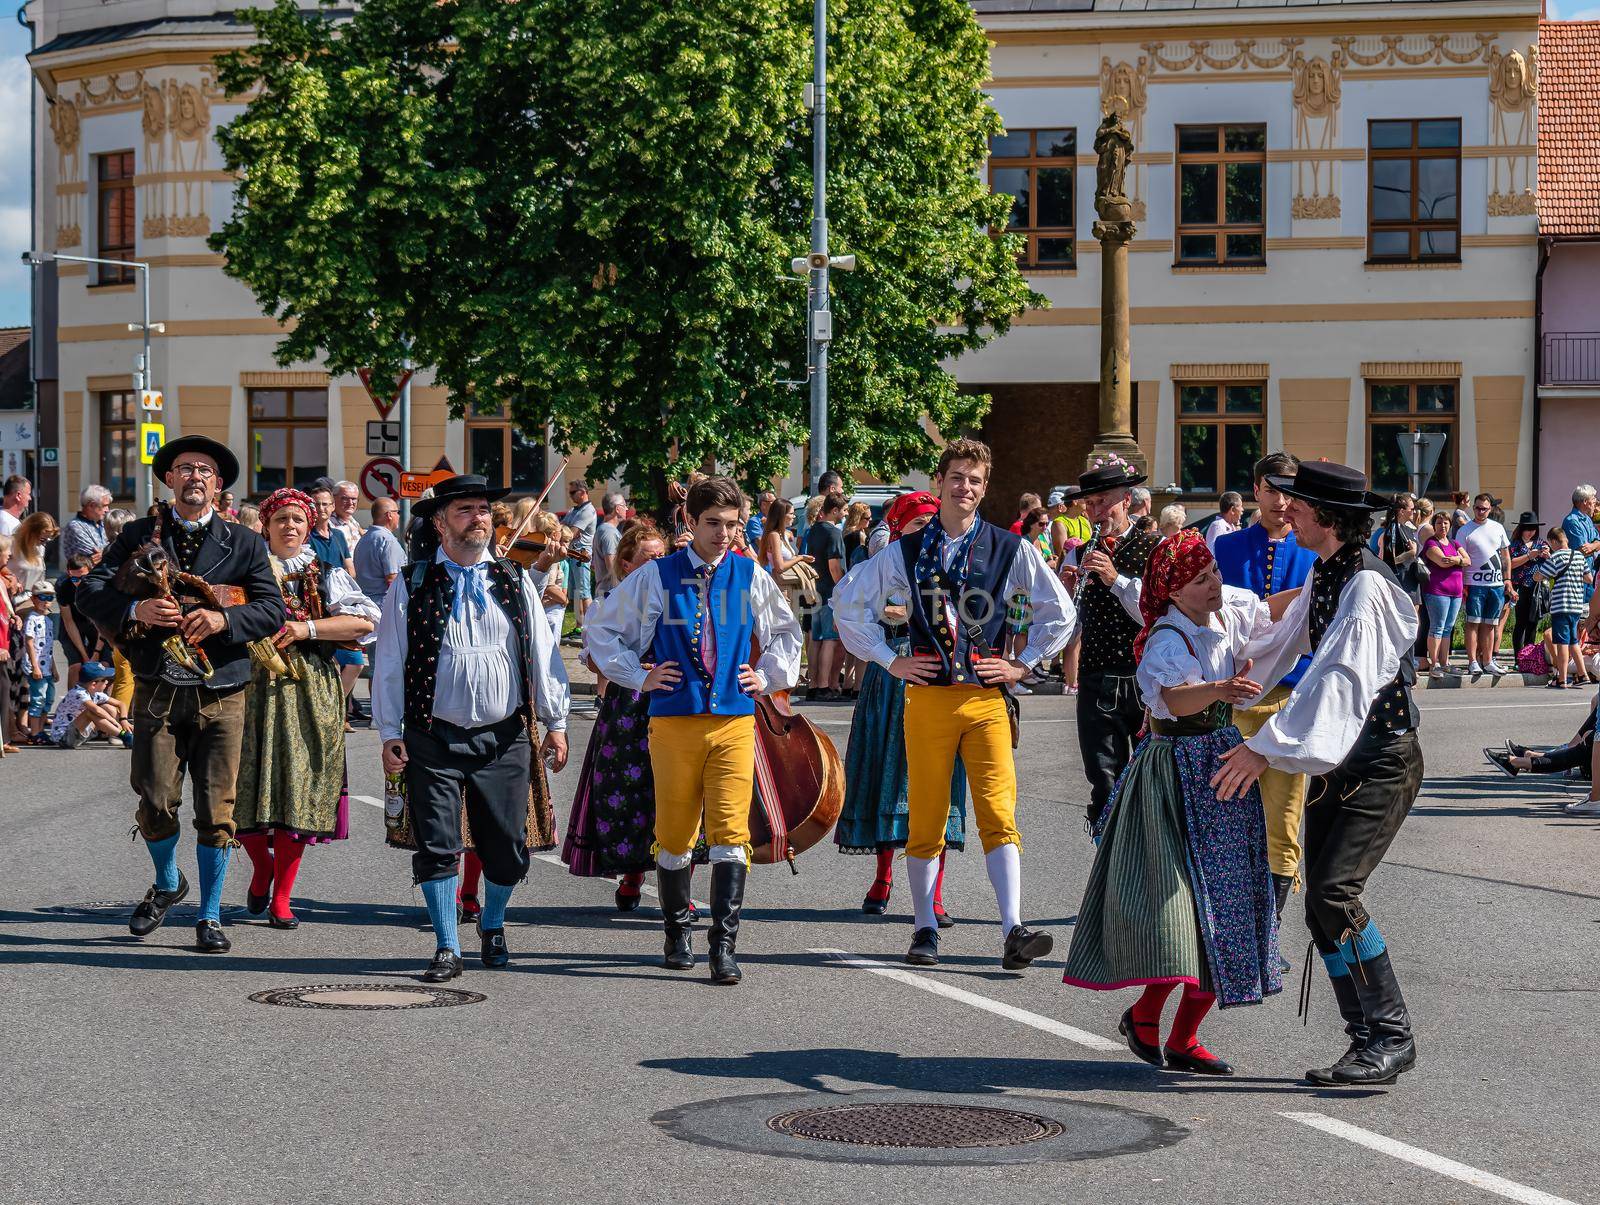 International folklore festival Straznice 77th year01 by rostik924